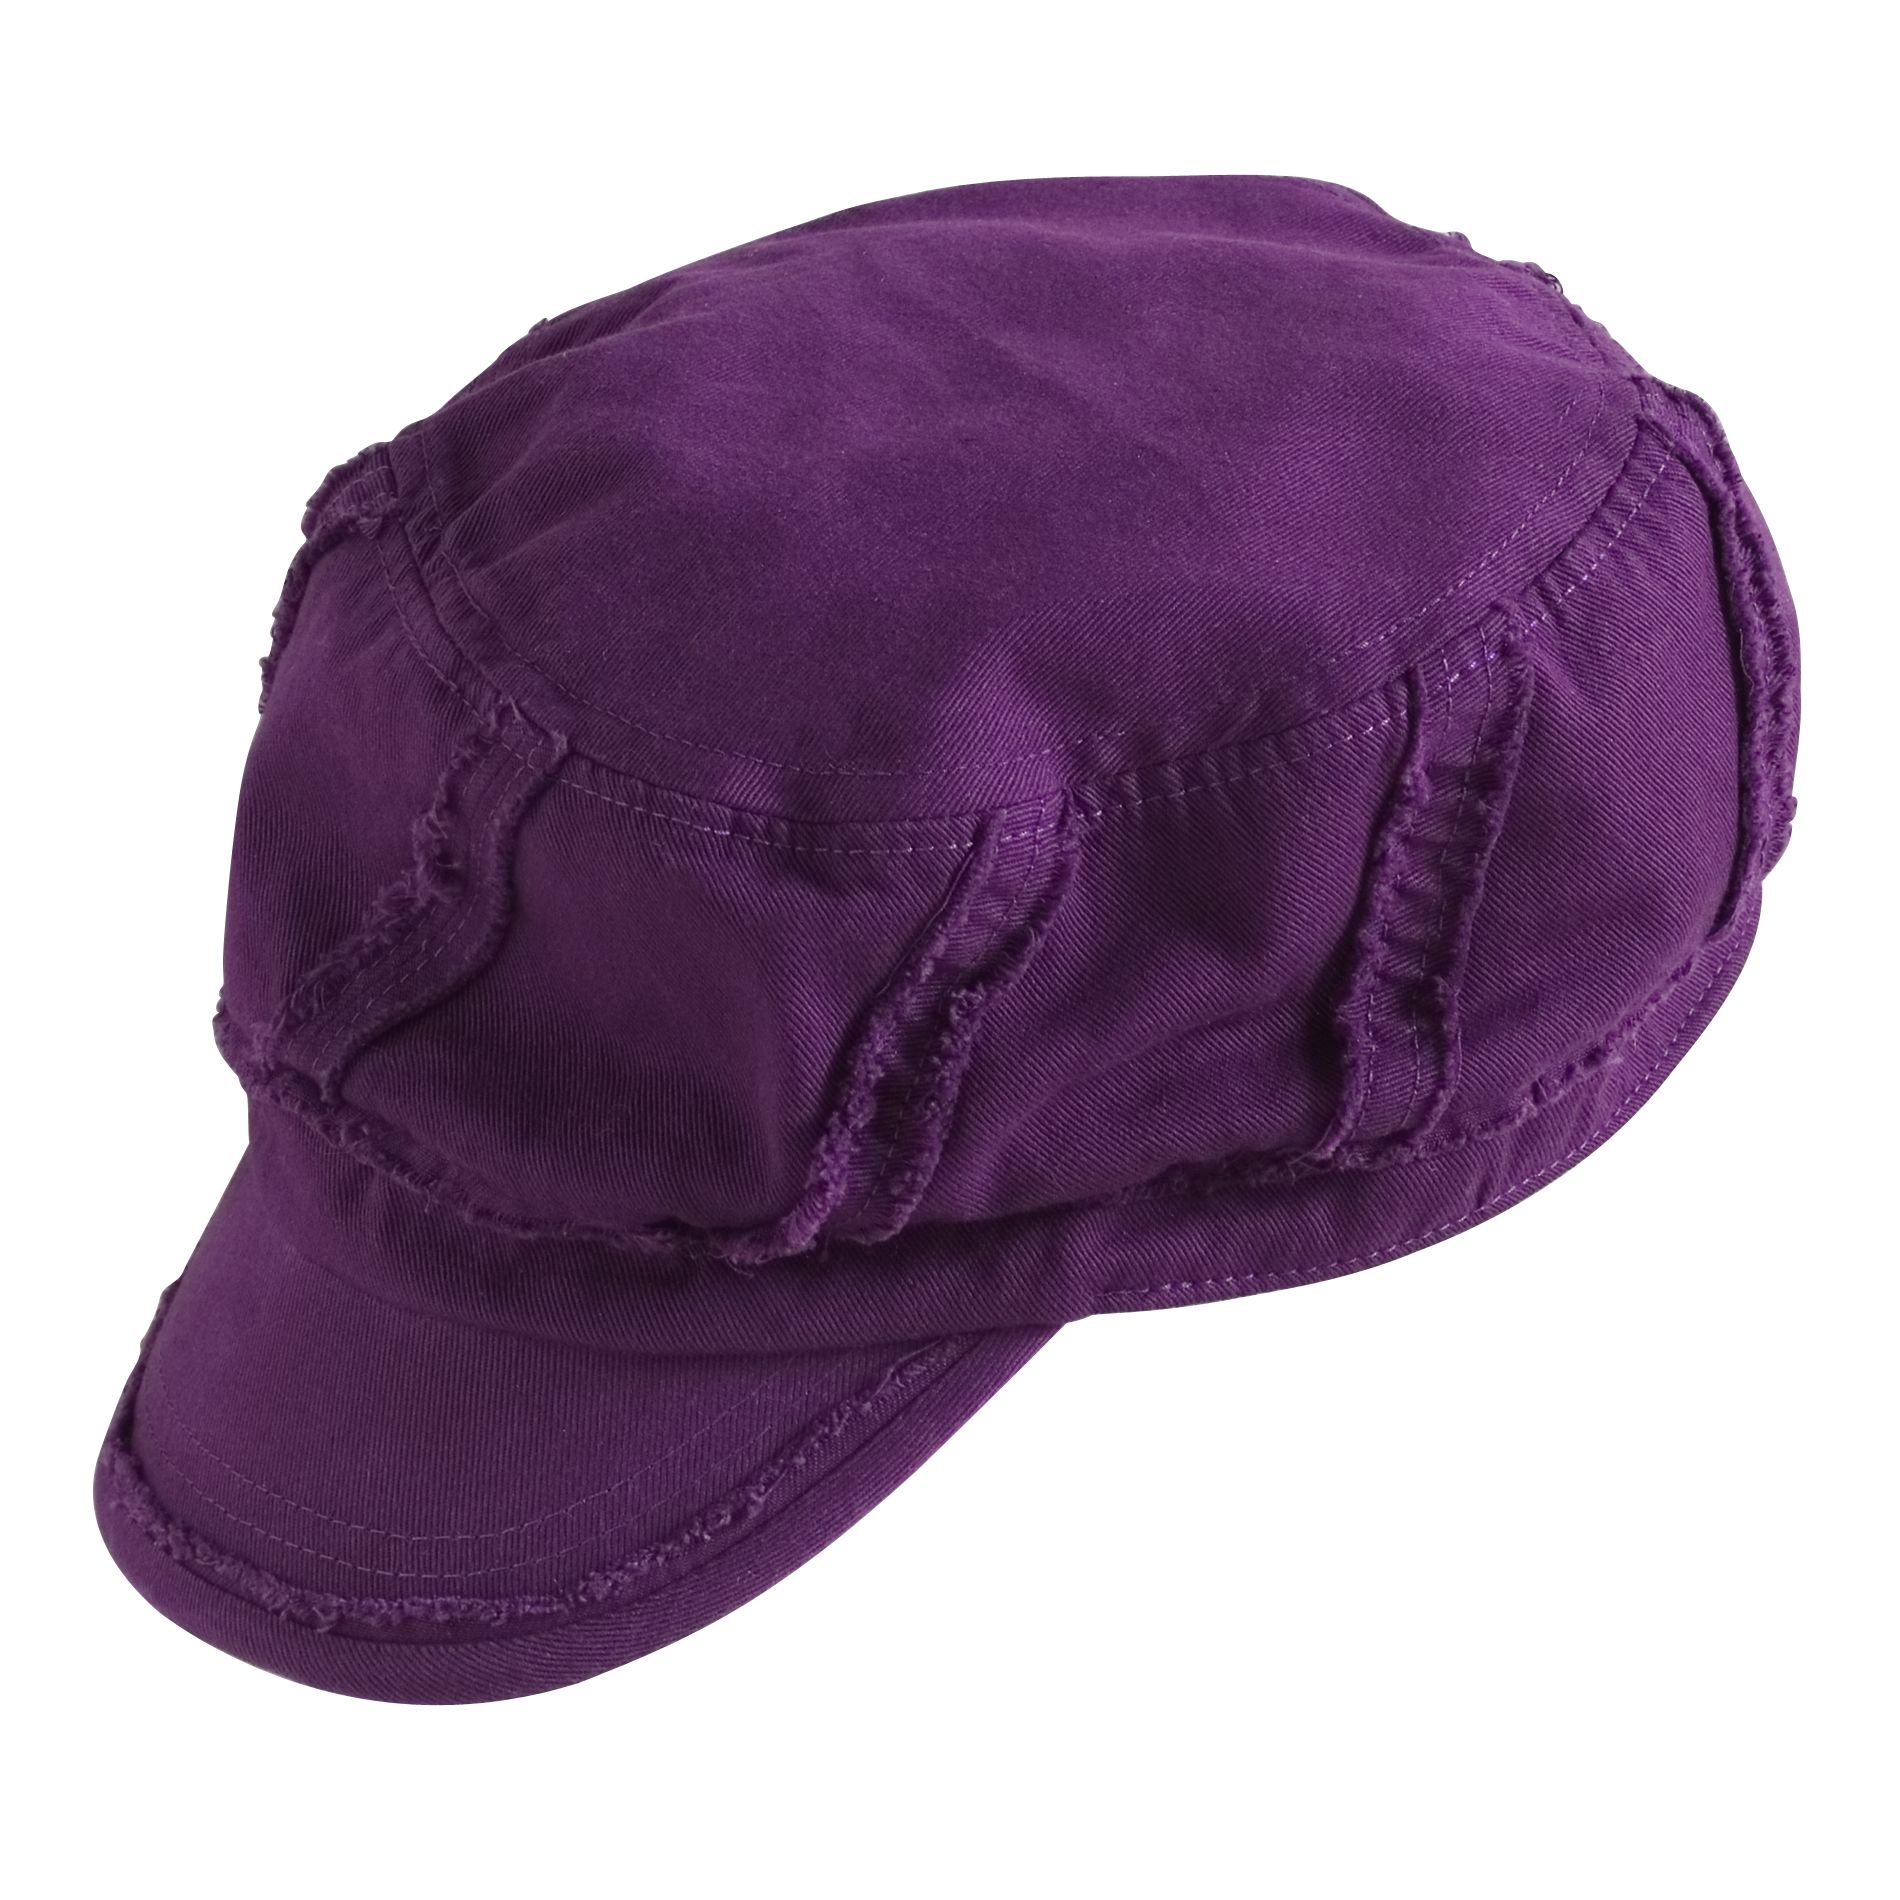 Joe Boxer Women's Deconstructed Twill Hat